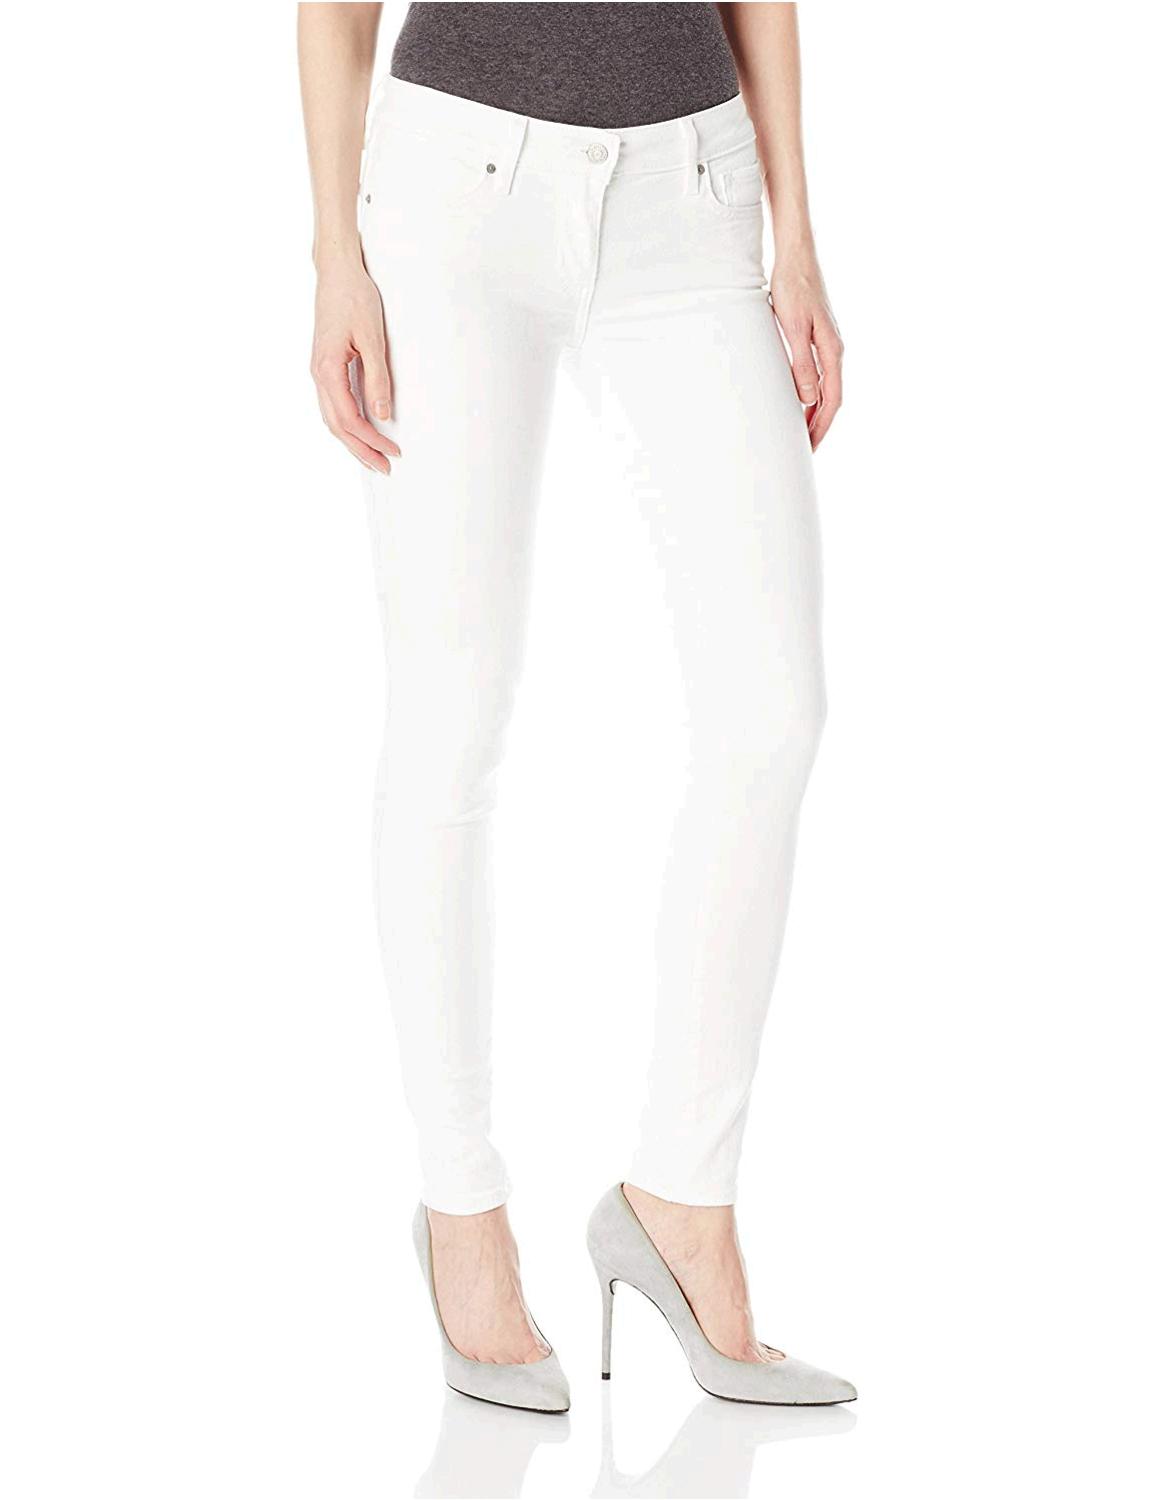 Levi's Women's 711 Skinny Jeans, Soft Clean White, 28, White, Size 28 ...